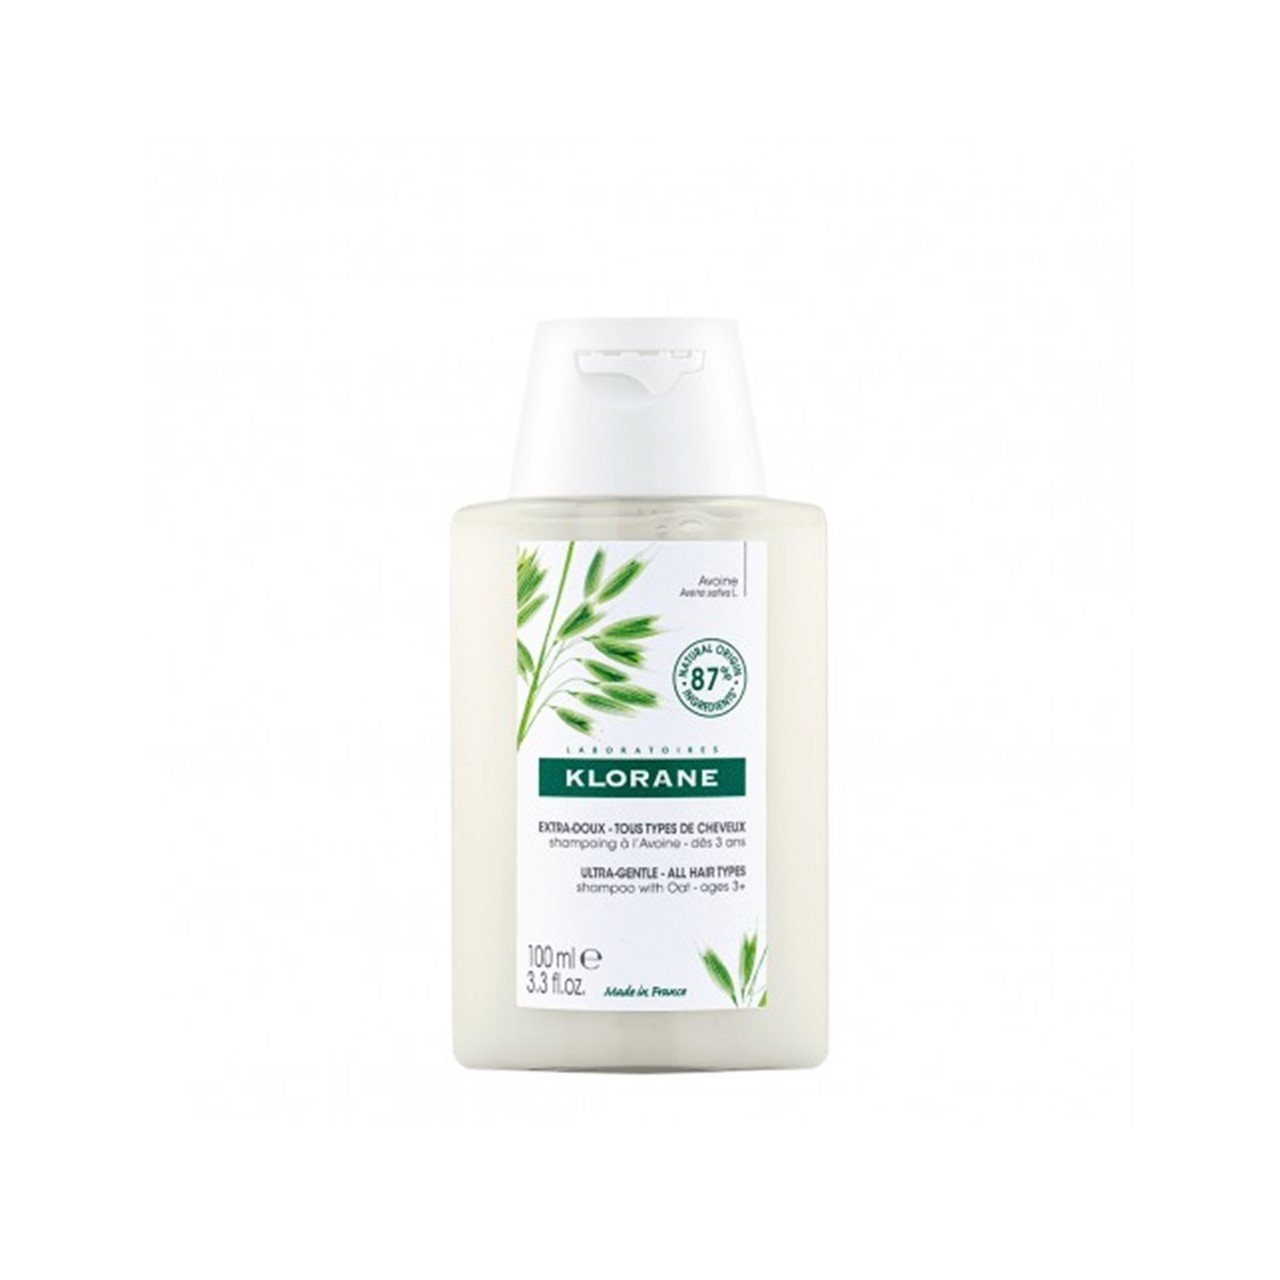 Klorane Ultra-Gentle Shampoo with Oat Milk 100ml (3.38fl oz)